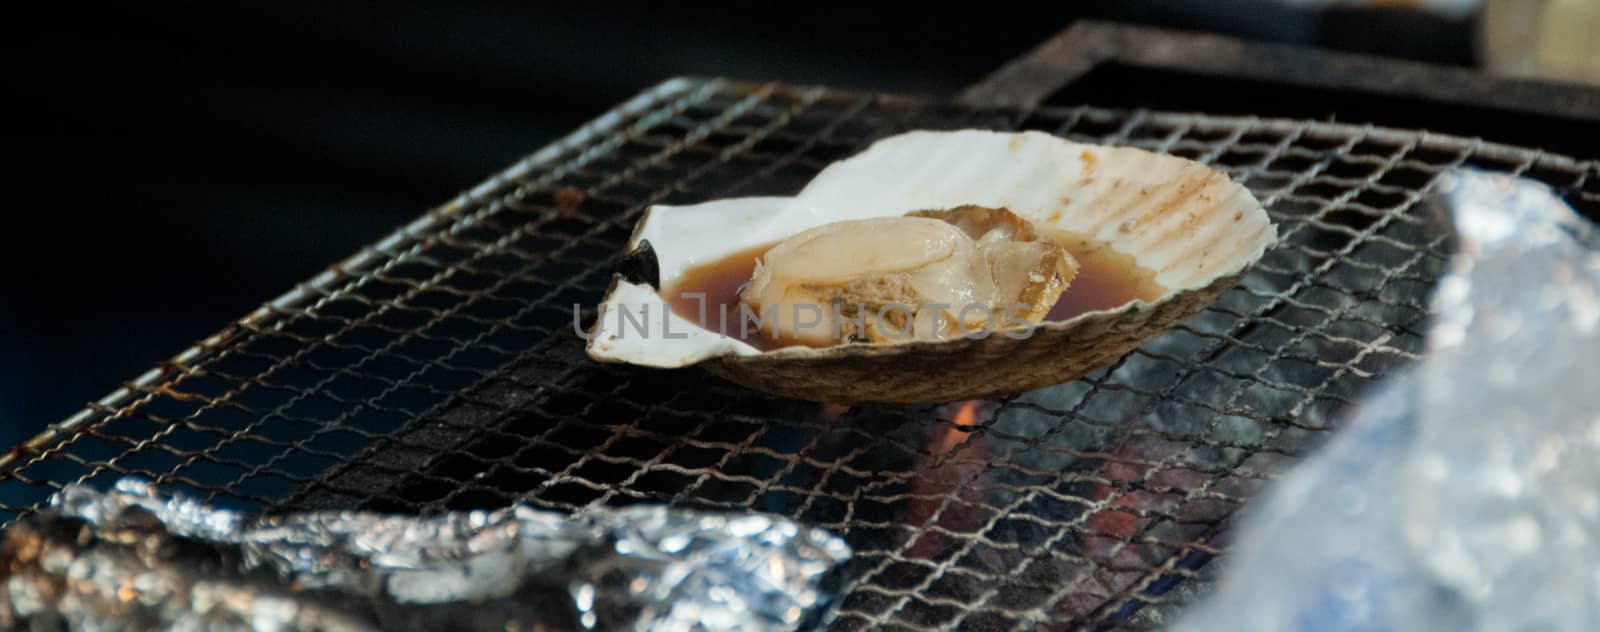 Grilled giant Hokkaido scallop on charcoal cook stove by eyeofpaul